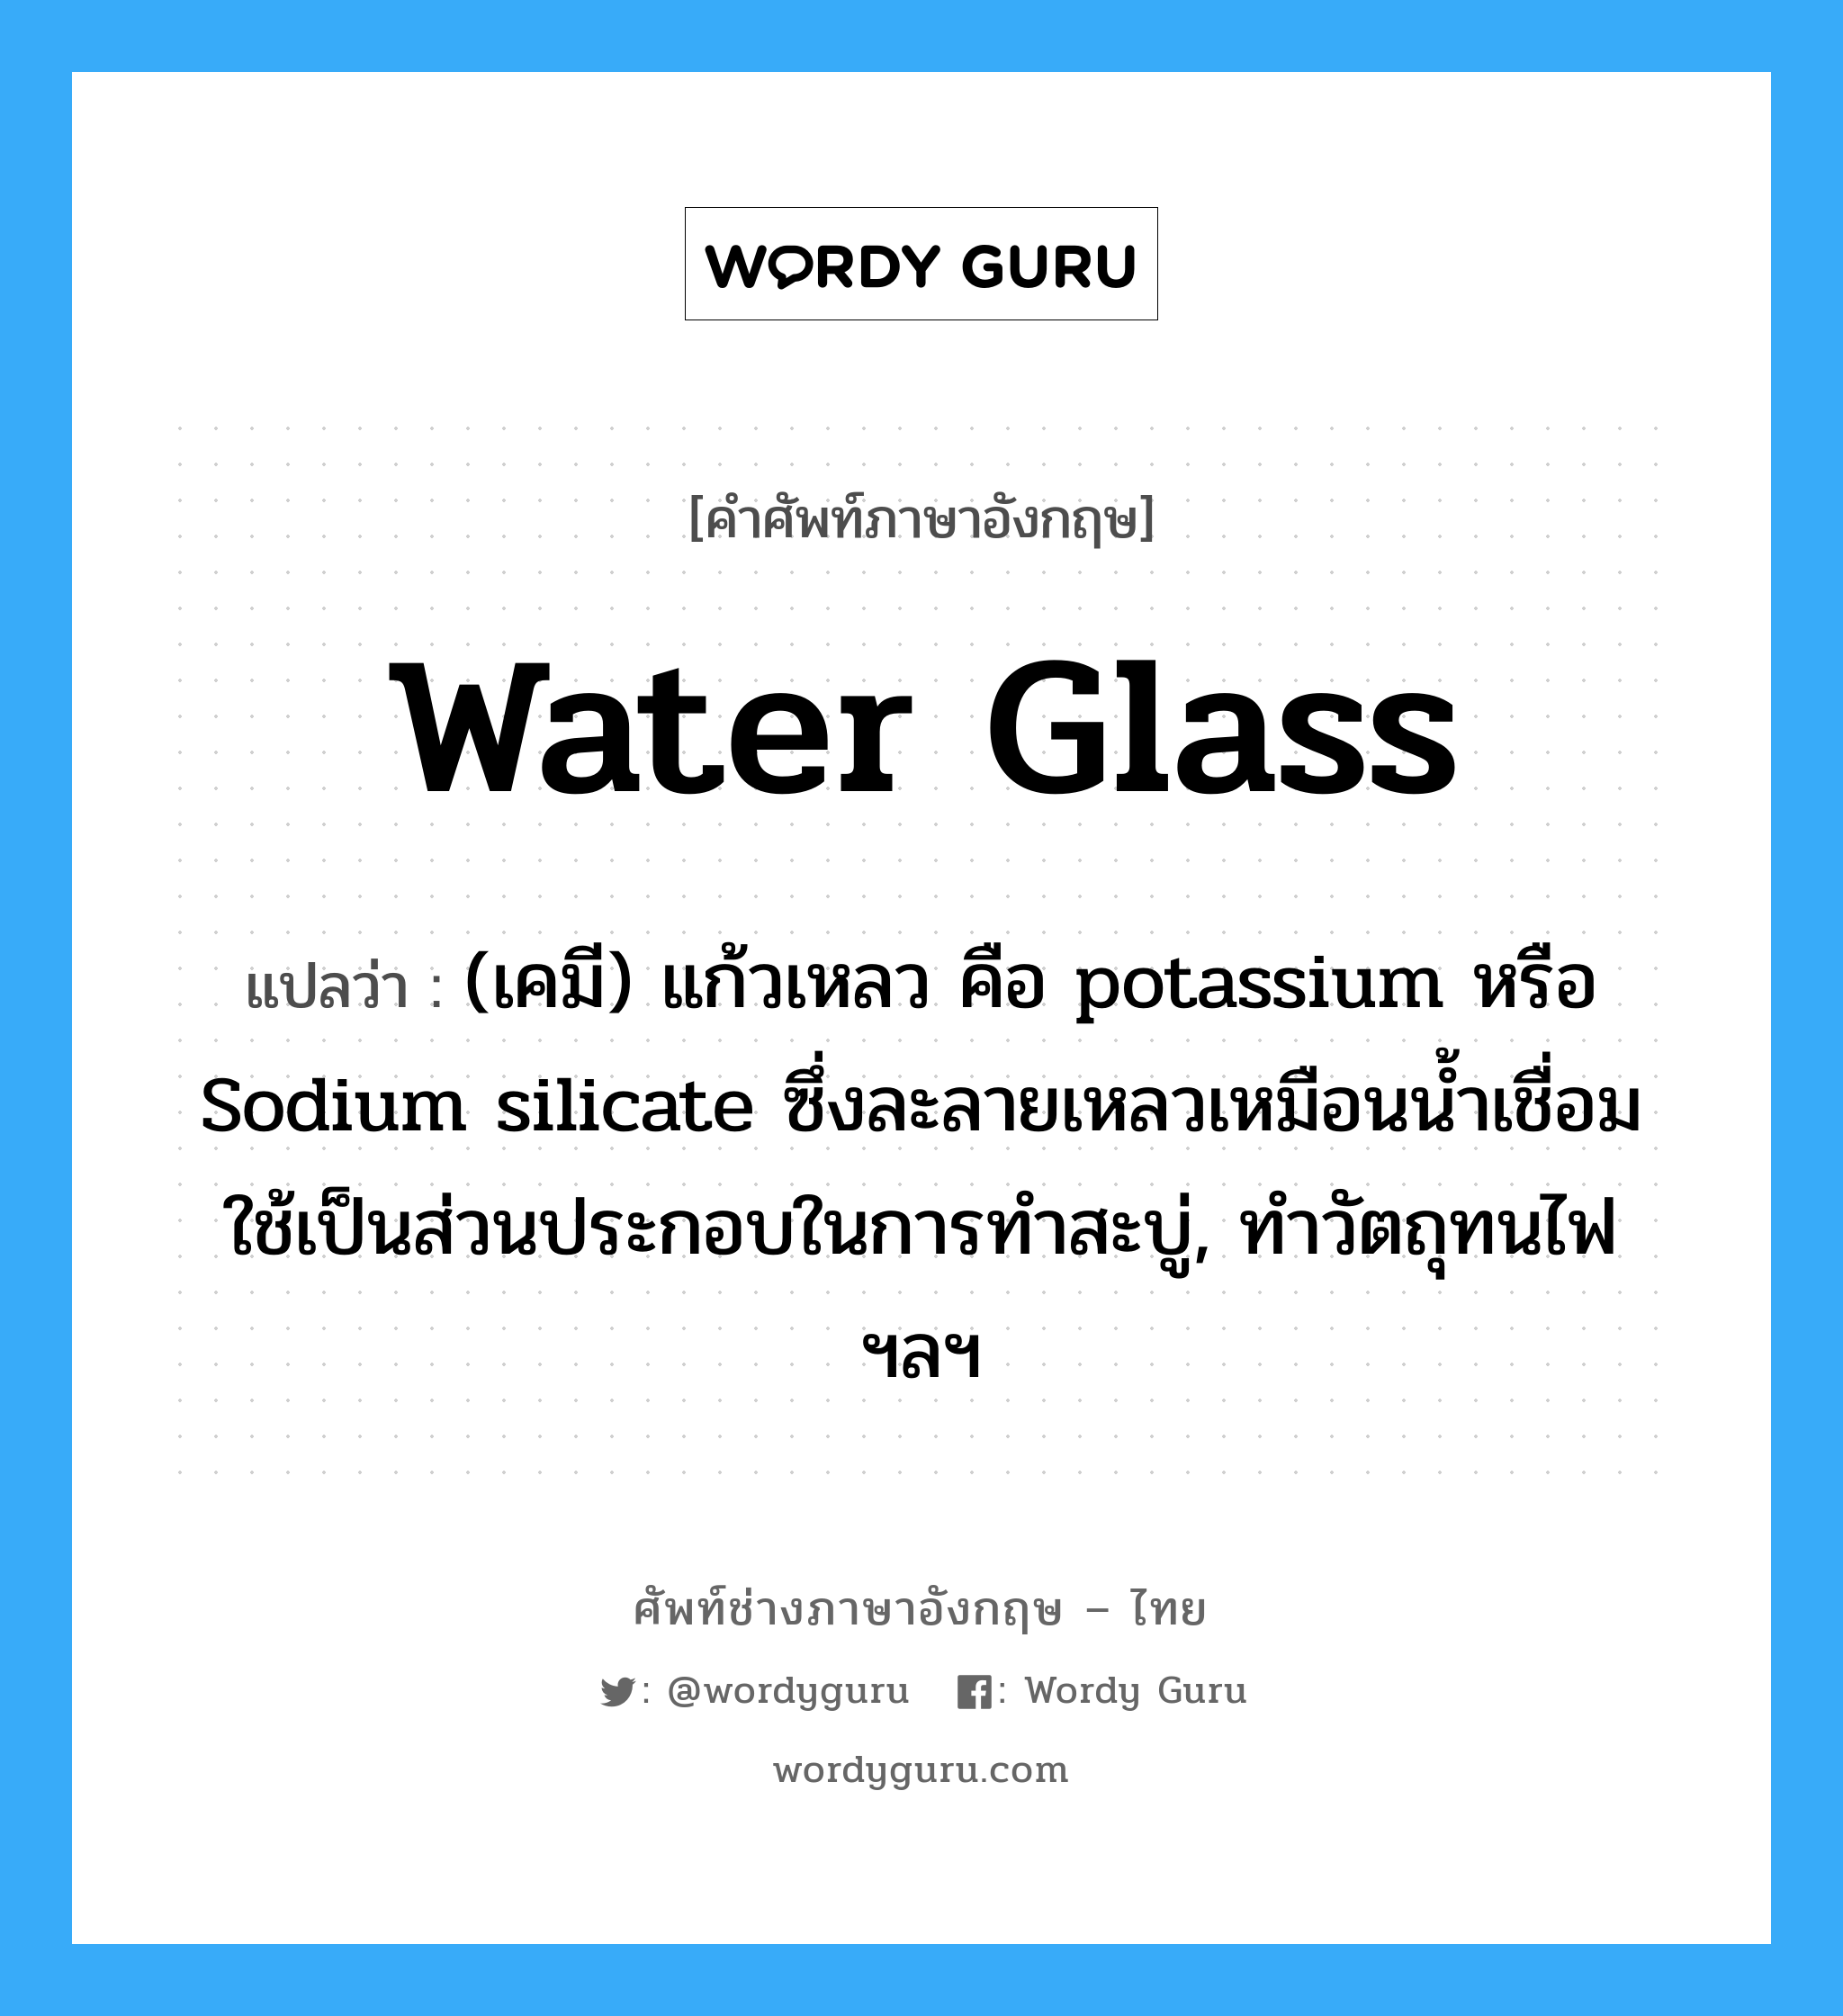 water glass แปลว่า?, คำศัพท์ช่างภาษาอังกฤษ - ไทย water glass คำศัพท์ภาษาอังกฤษ water glass แปลว่า (เคมี) แก้วเหลว คือ potassium หรือ Sodium silicate ซึ่งละลายเหลวเหมือนน้ำเชื่อม ใช้เป็นส่วนประกอบในการทำสะบู่, ทำวัตถุทนไฟ ฯลฯ